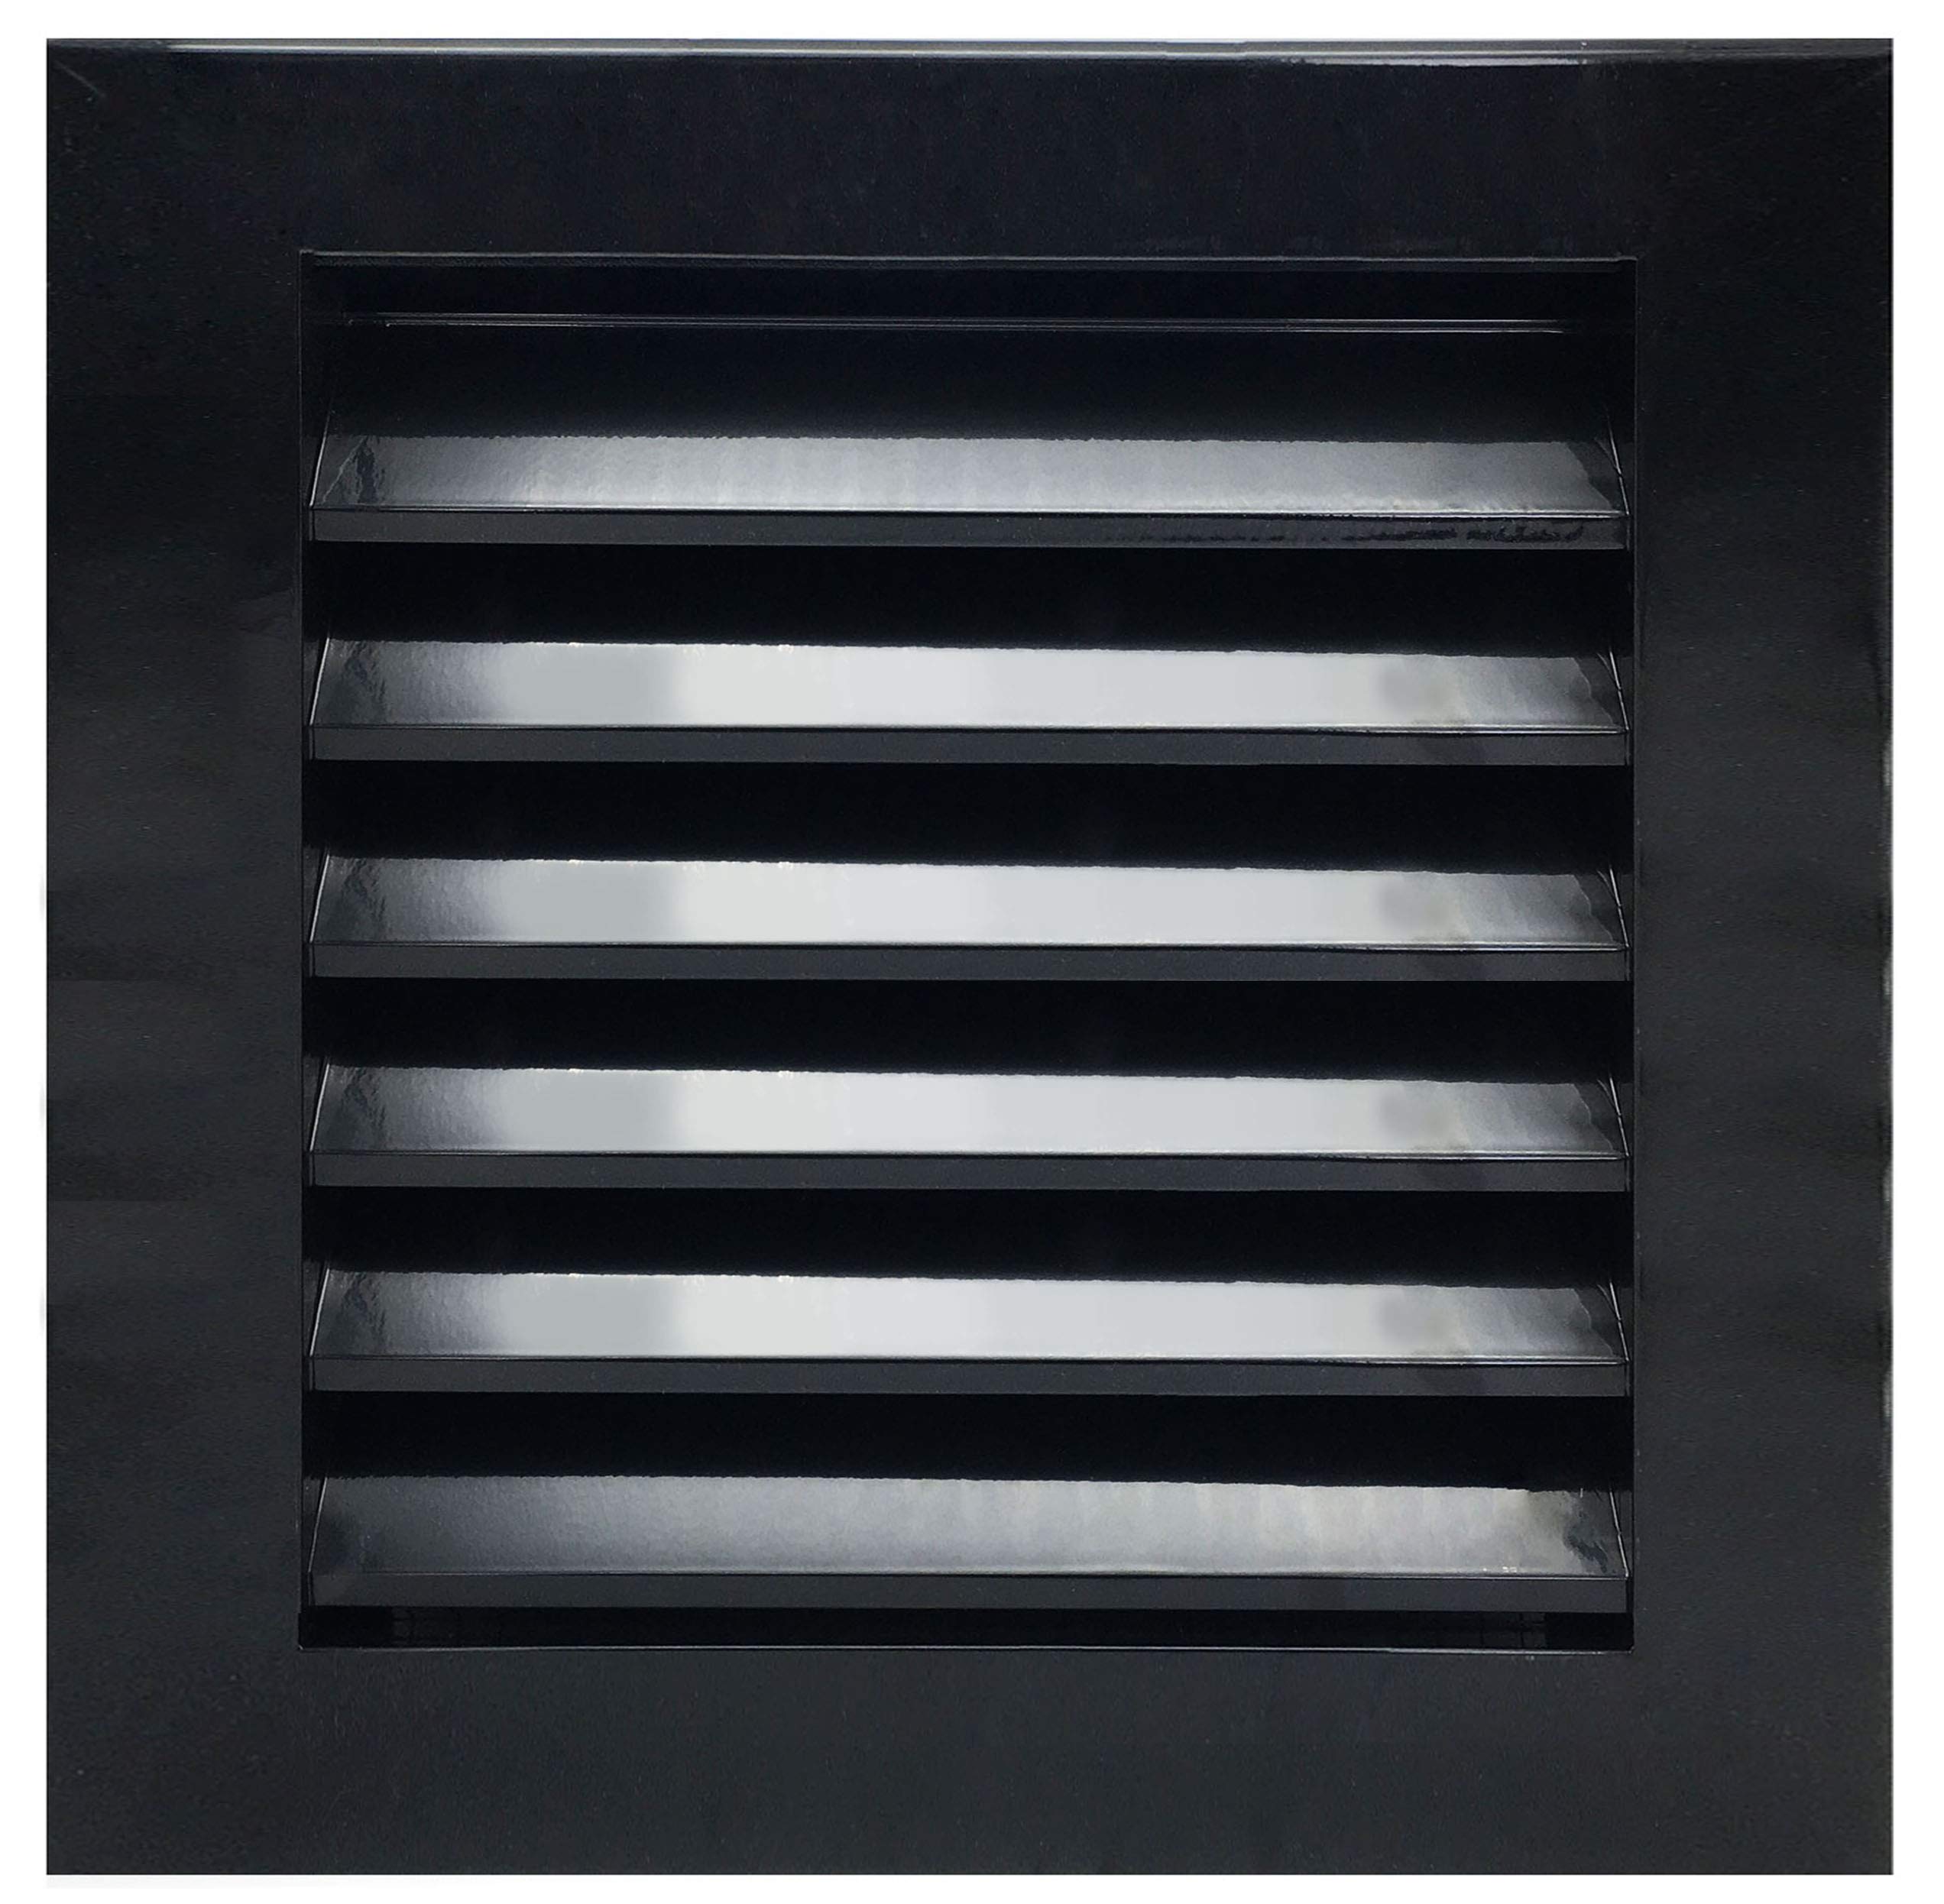 HVAC Premium 16 W X 16 H Aluminum Exterior Vent For Walls  Crawlspace - Rain  Waterproof Air Vent With Screen Mesh - Hvac Grille - Black Ou